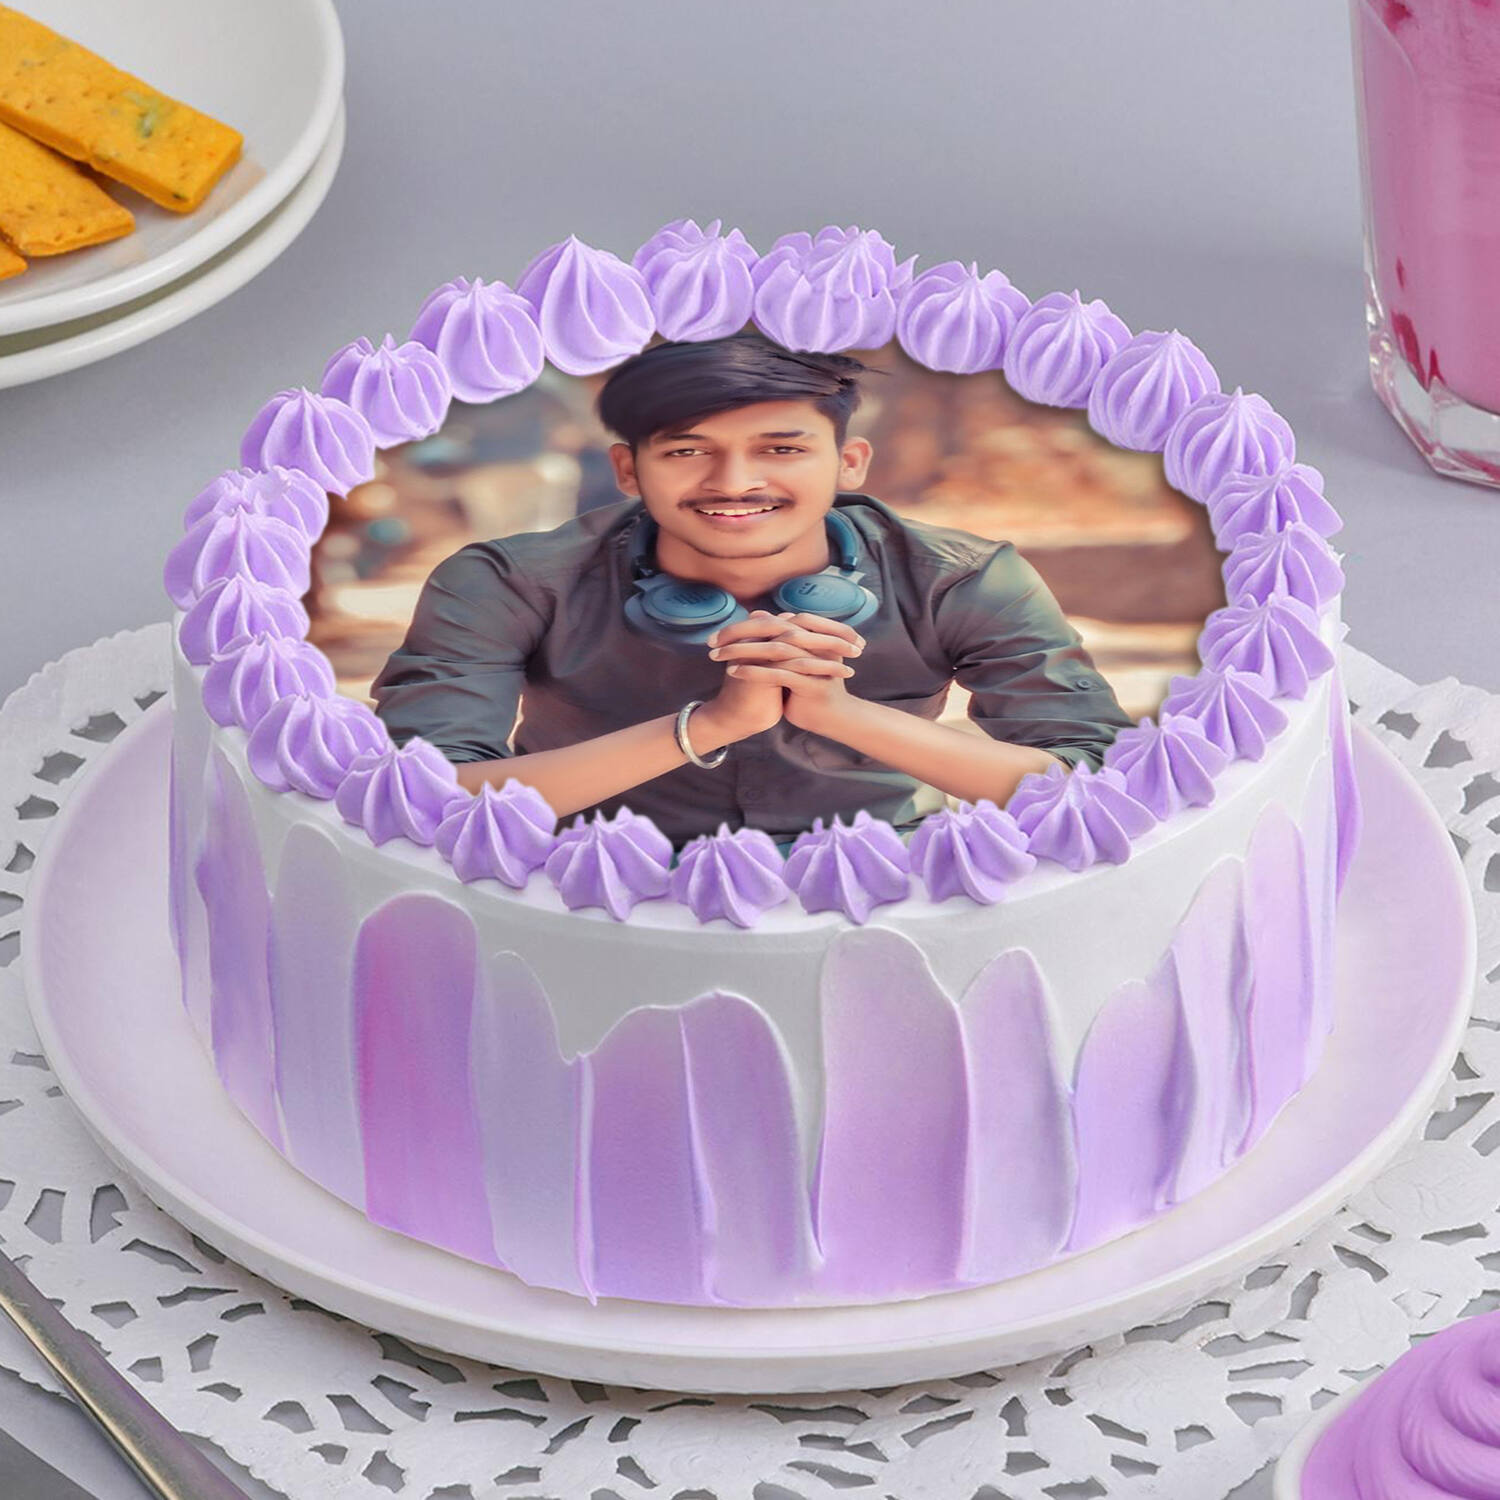 Kpop Bts Boys Theme Kids1 Kg Birthday Cake | Fancy Birthday Cakes for Kids  | Cake Delivery in Chennai - Cake Square Chennai | Cake Shop in Chennai